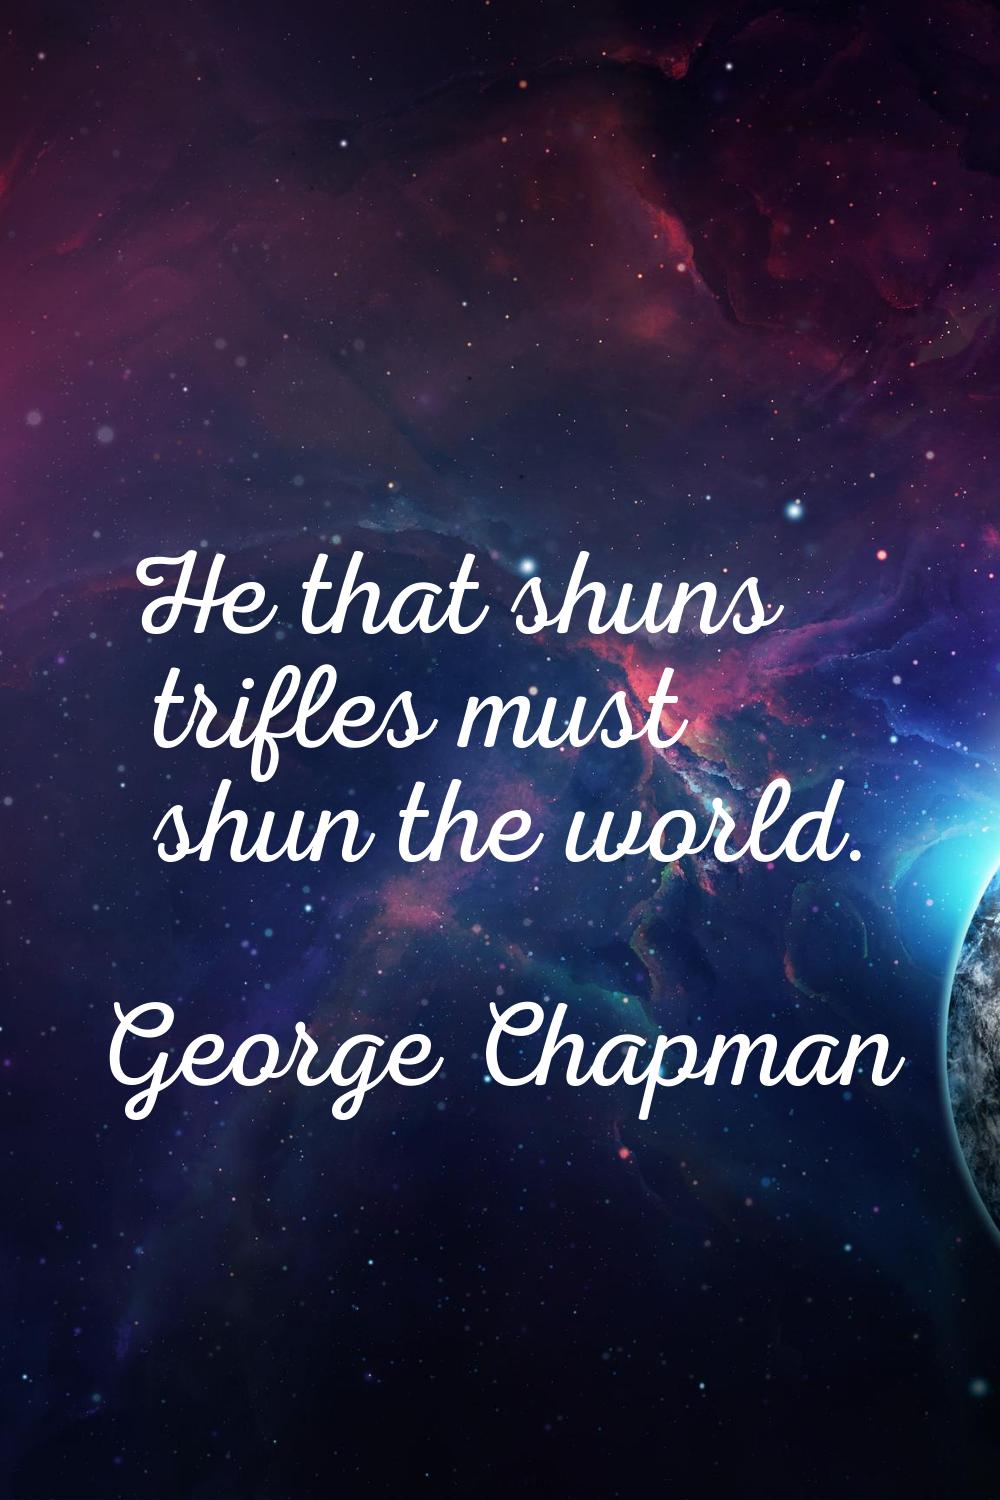 He that shuns trifles must shun the world.